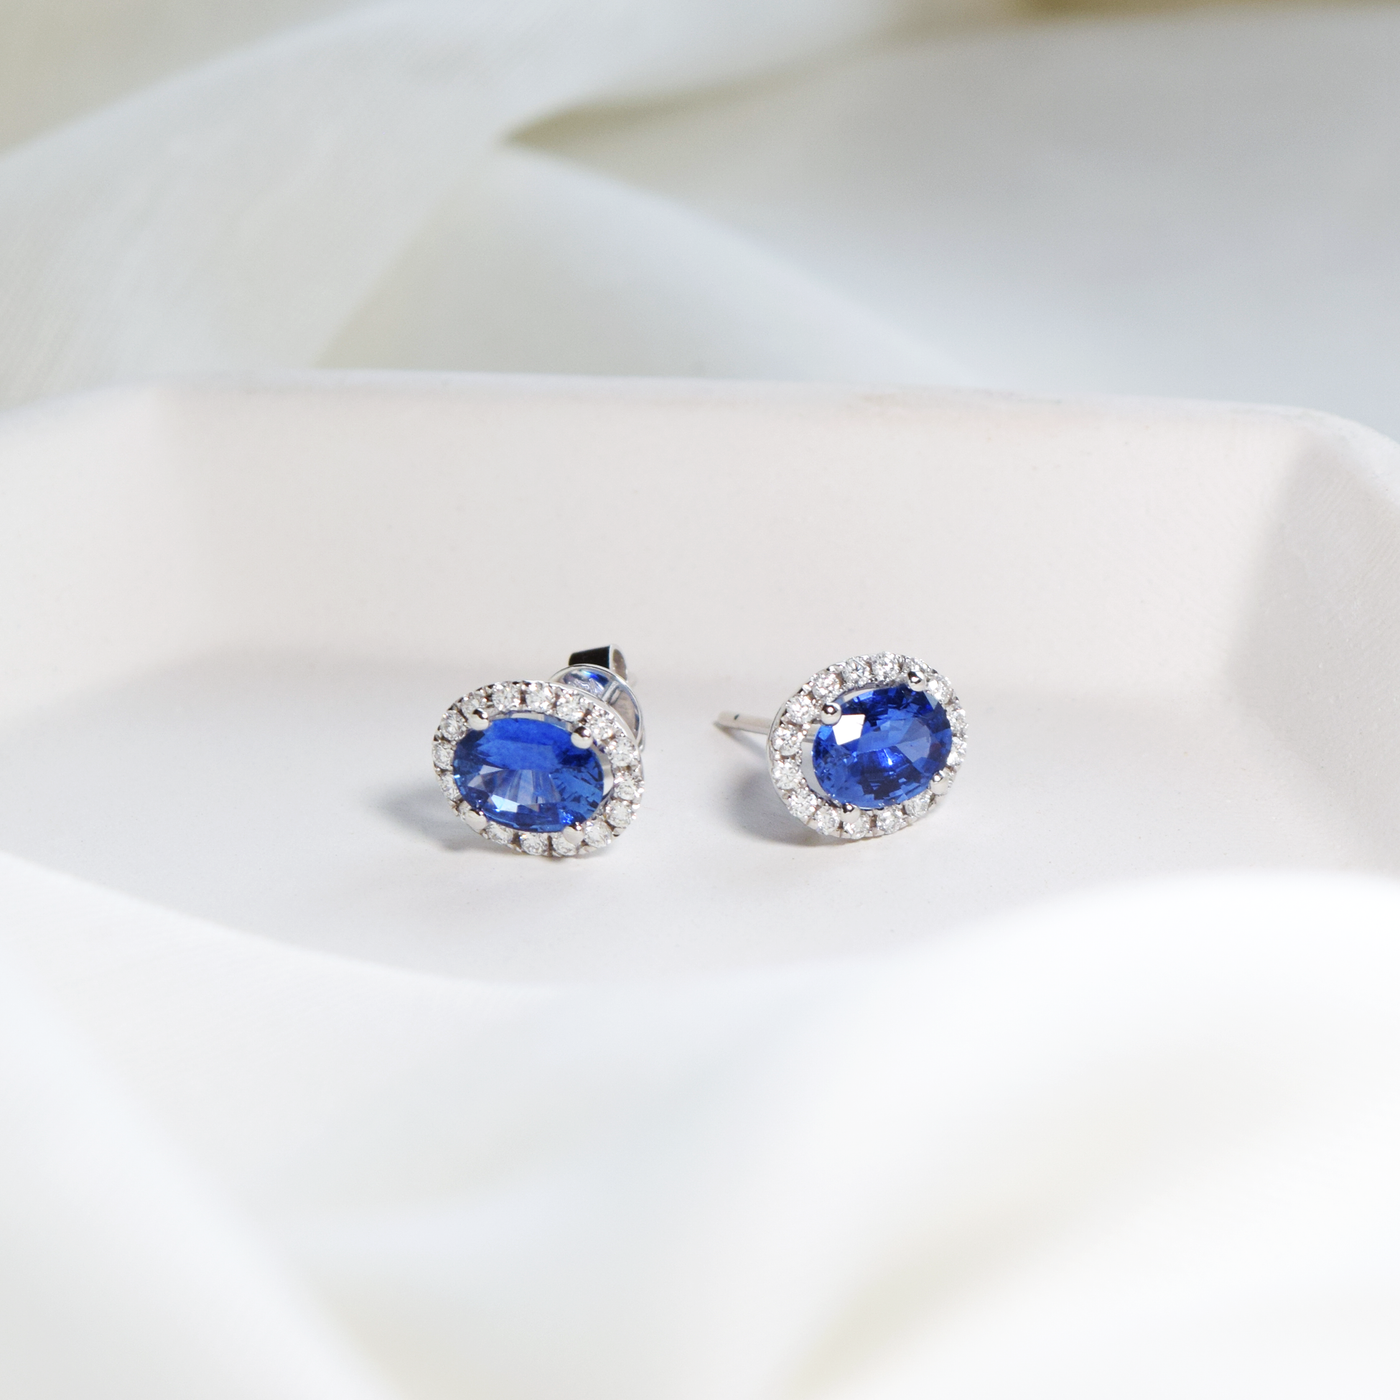 Sapphire & Diamond Earrings 347465